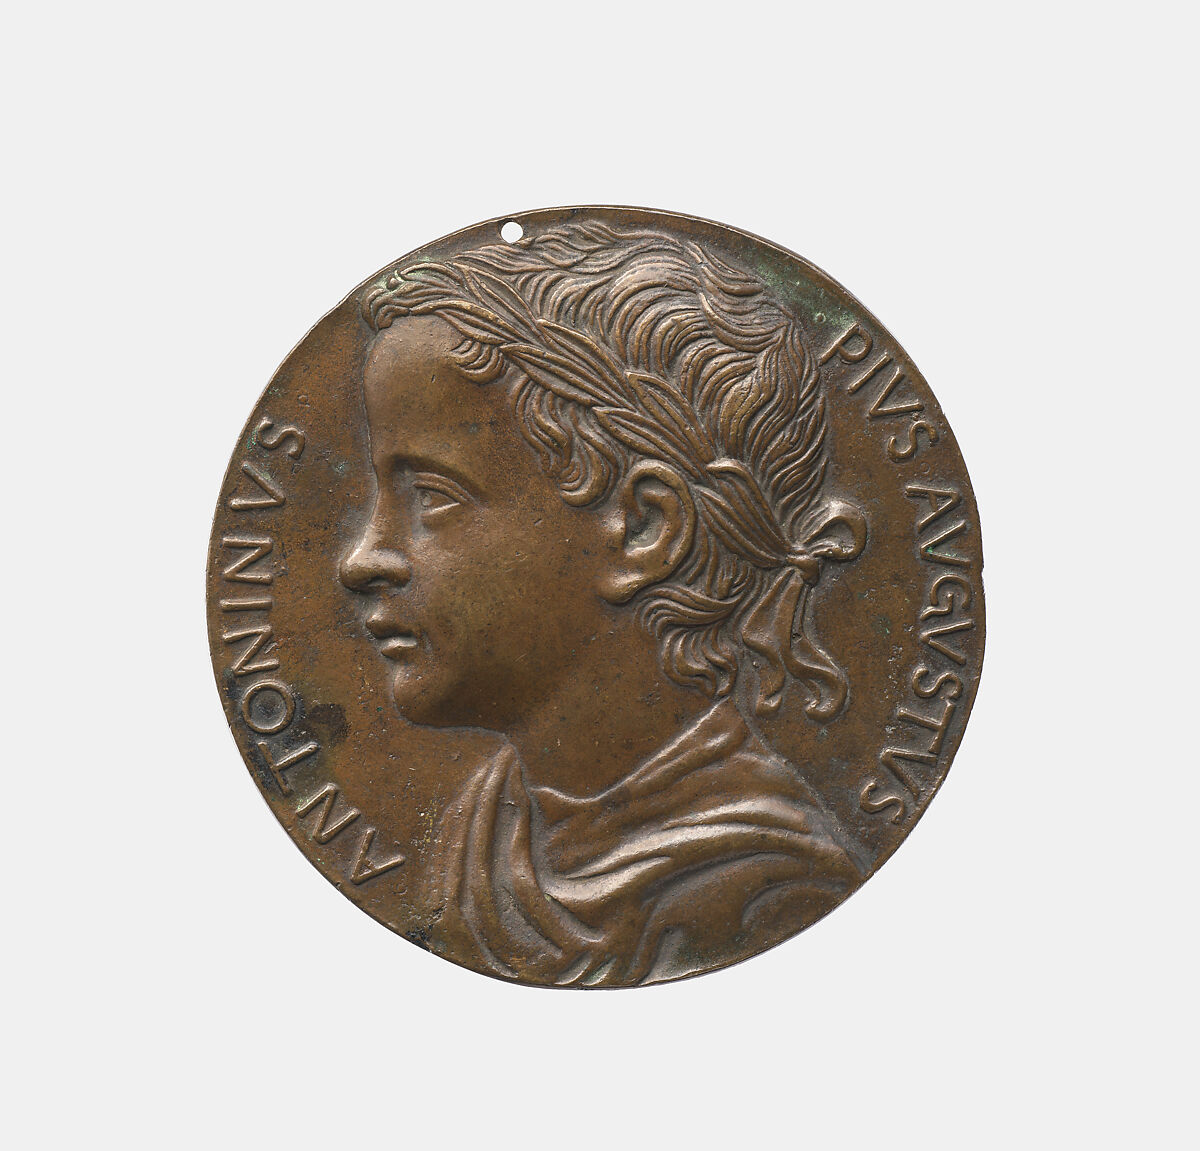 Emperor Caracalla 211-17, Giovanni Boldù (Italian, Venice, active 1454–77), Bronze, Italian 